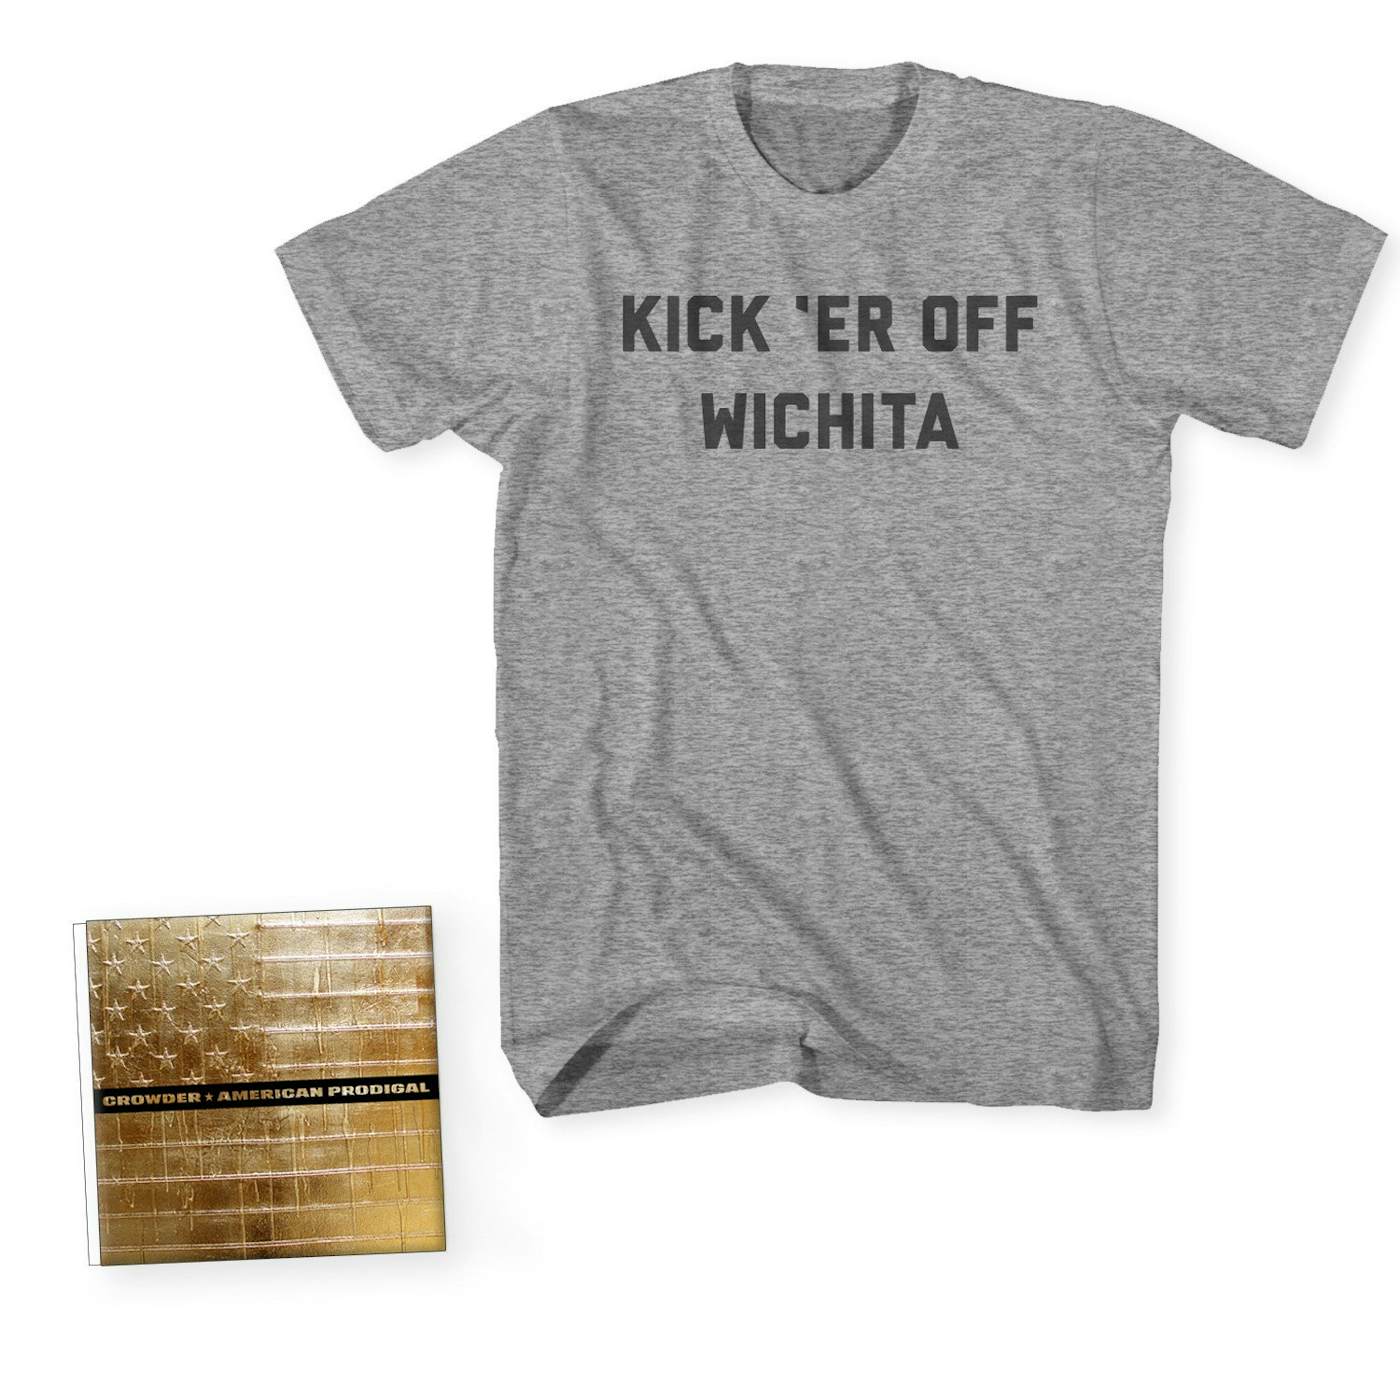 Crowder 'Kick 'Er Off Wichita' T-Shirt Bundle